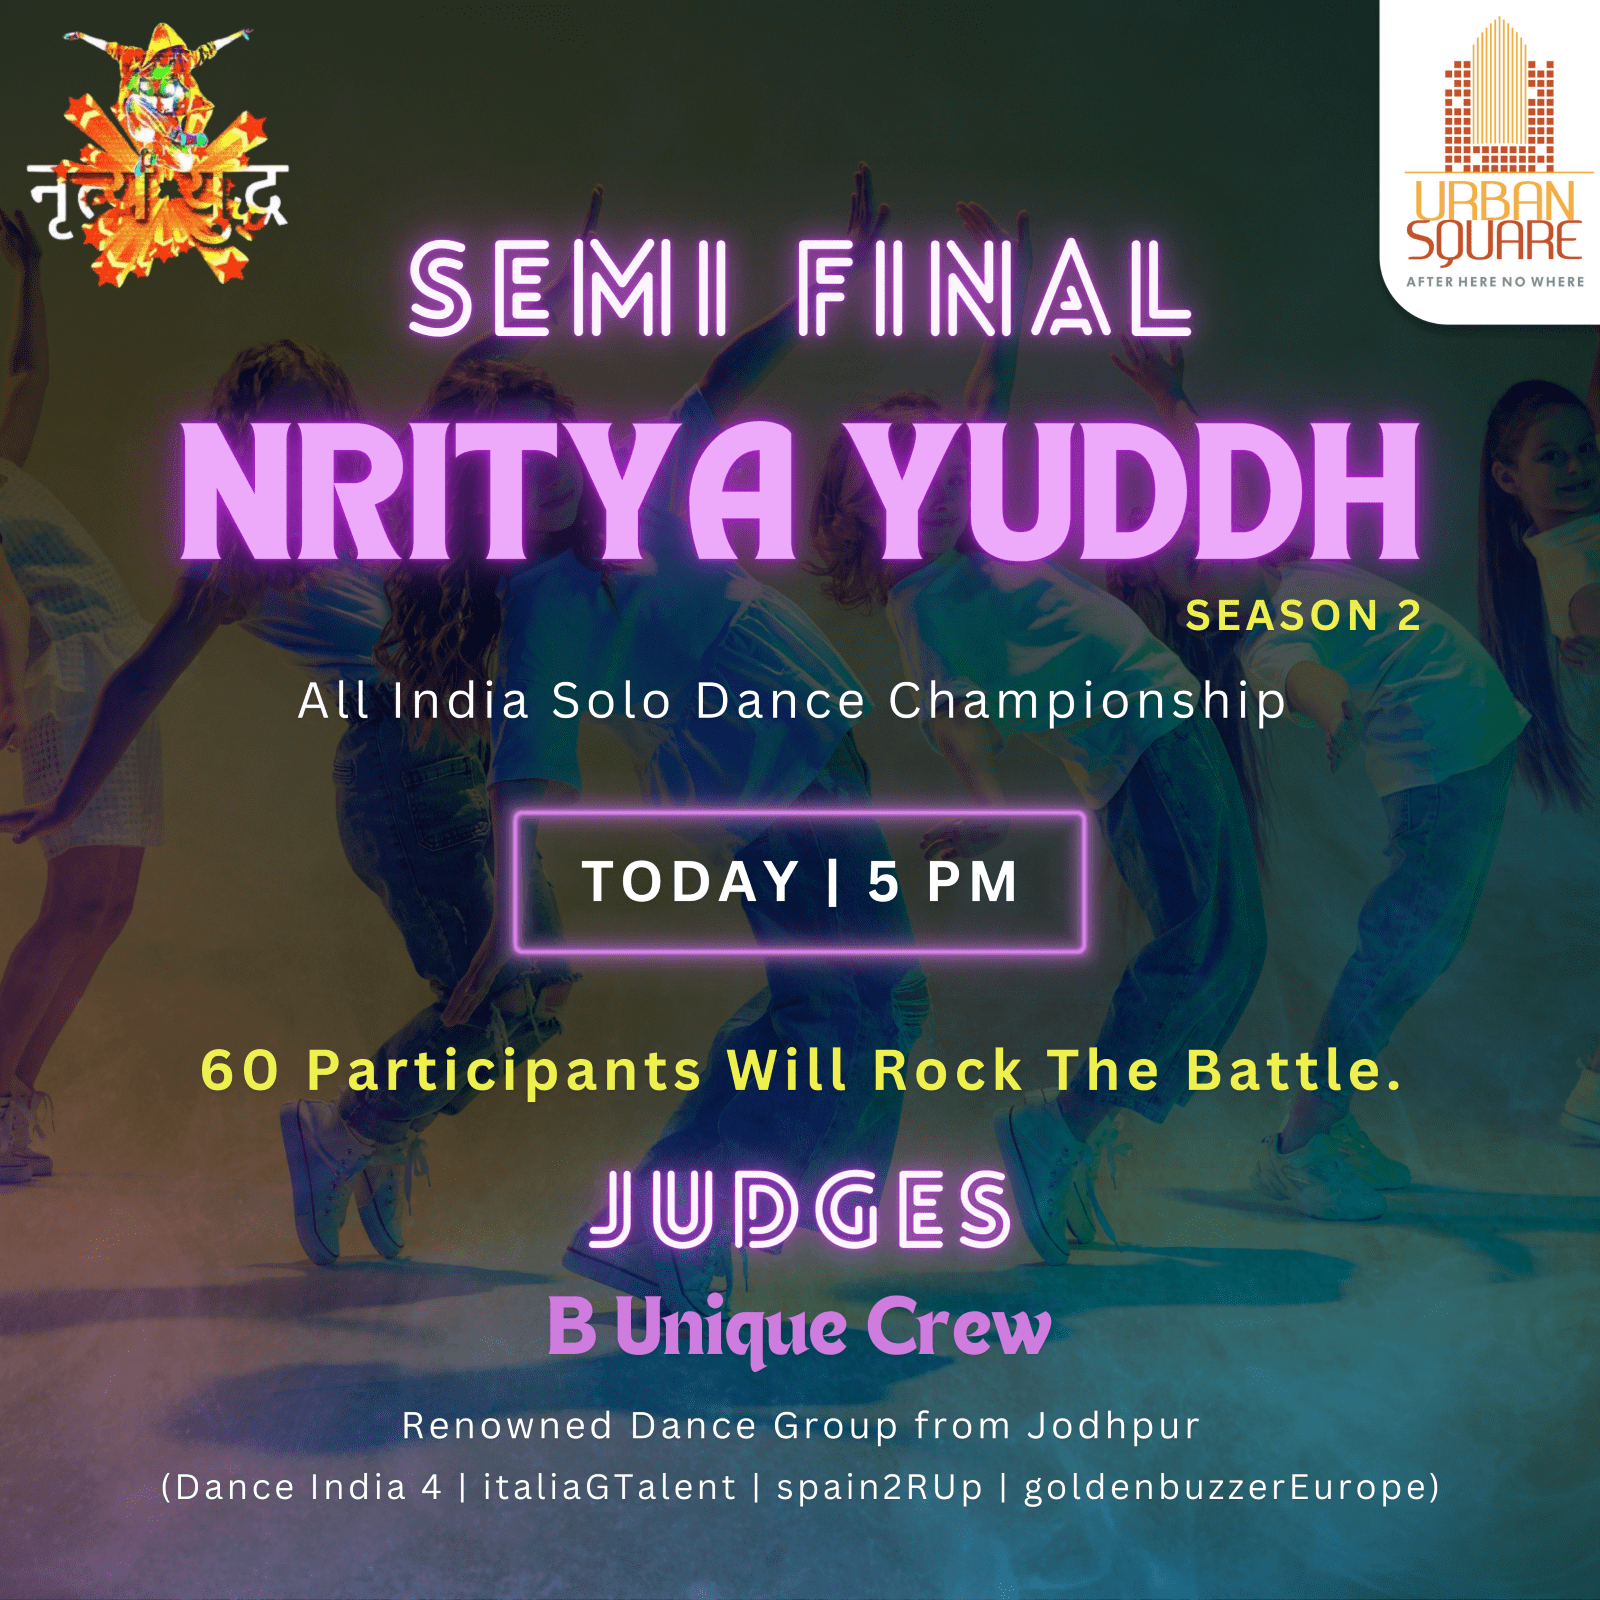 Witness Talent: Nritya Yuddh Season 2 at Urban Square Mall Today!